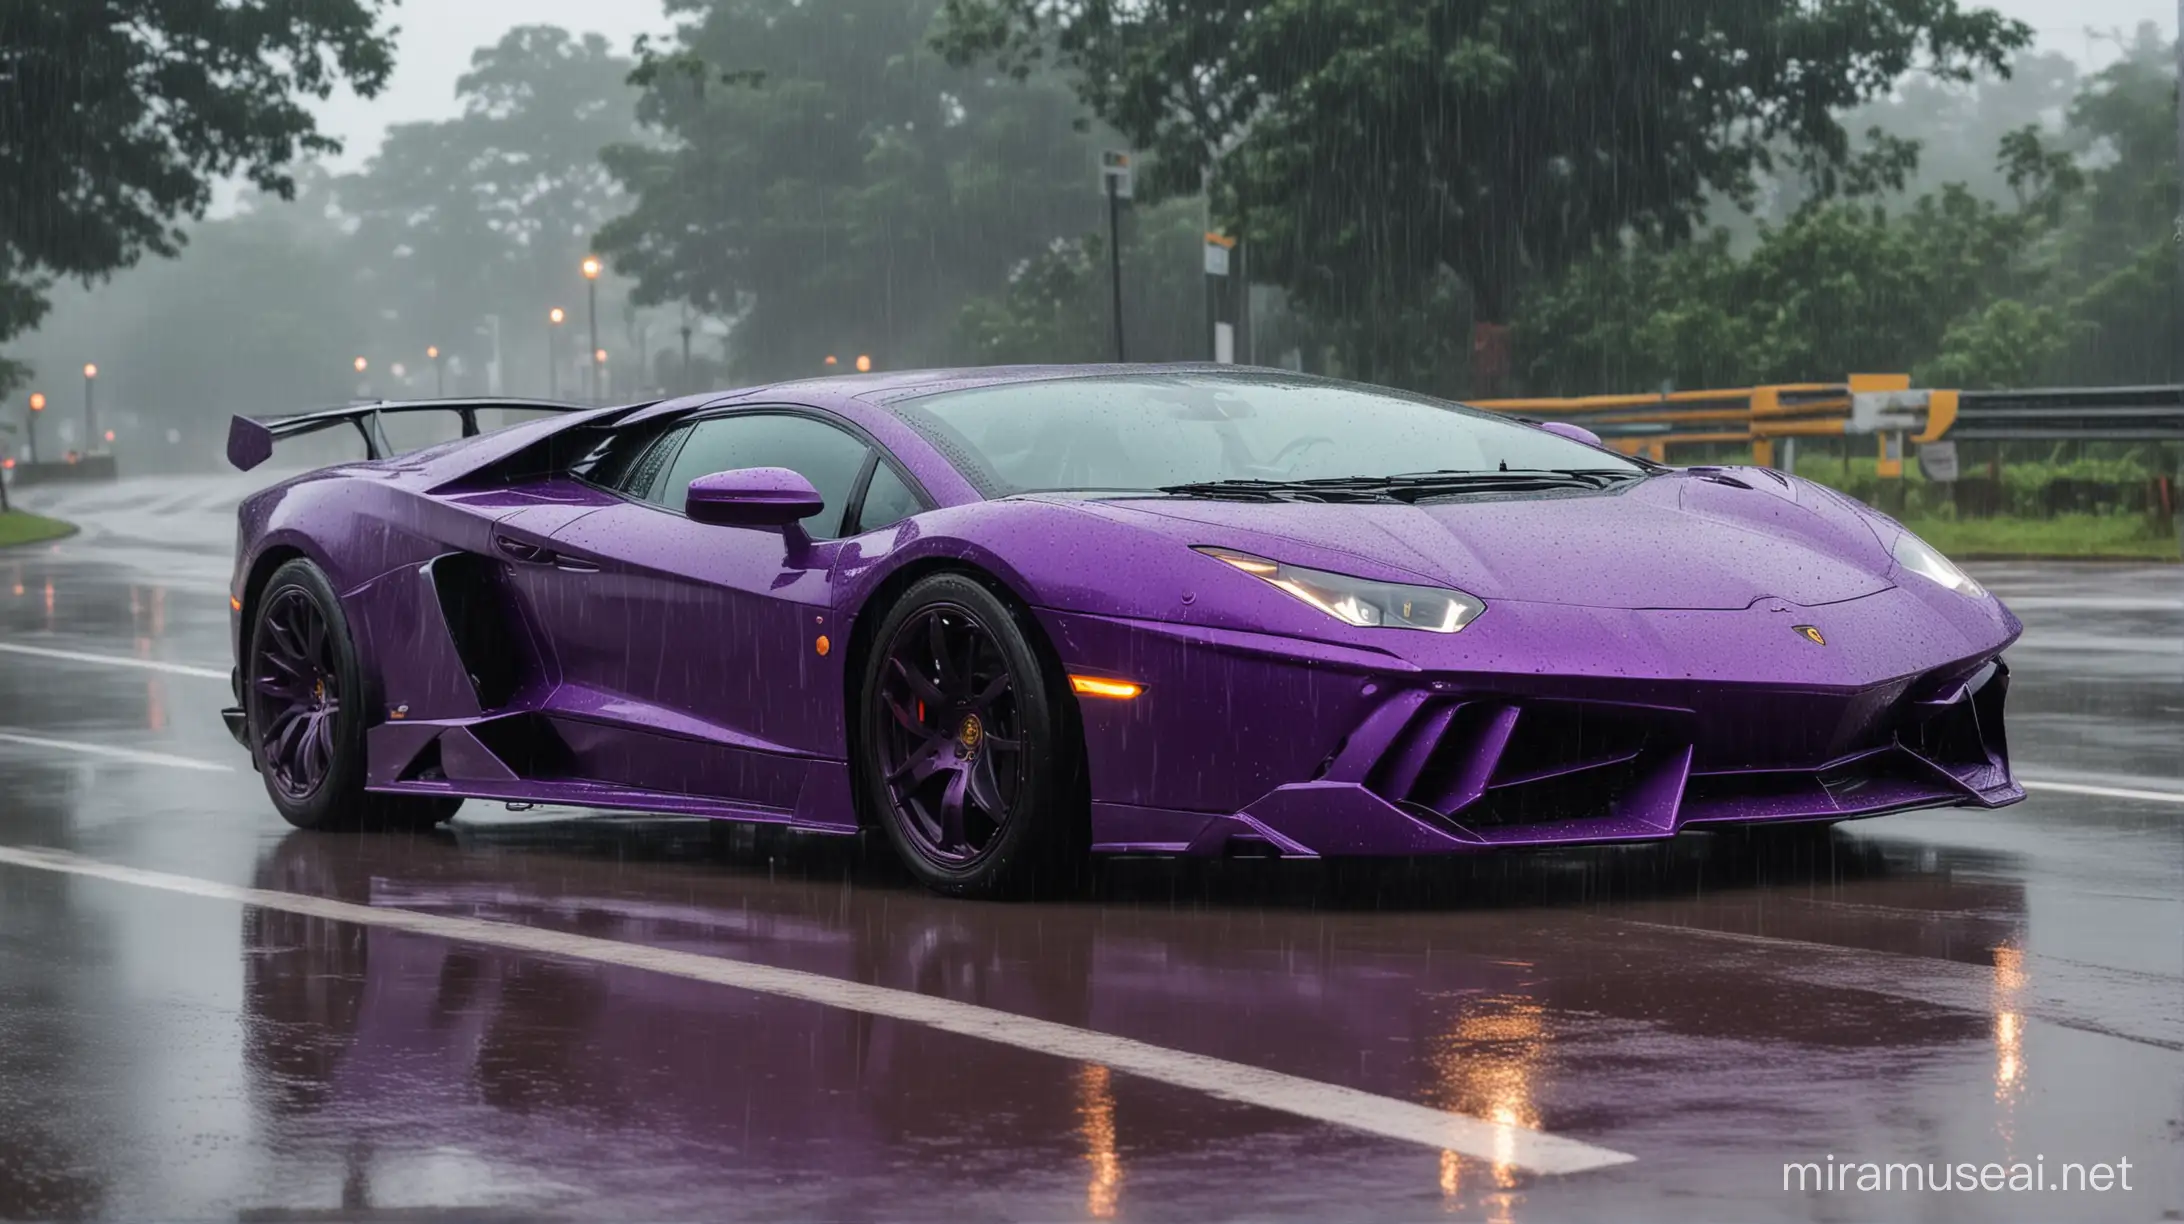 Aggressive Purple Lamborghini Racing Through Rainy Brazilian Roads